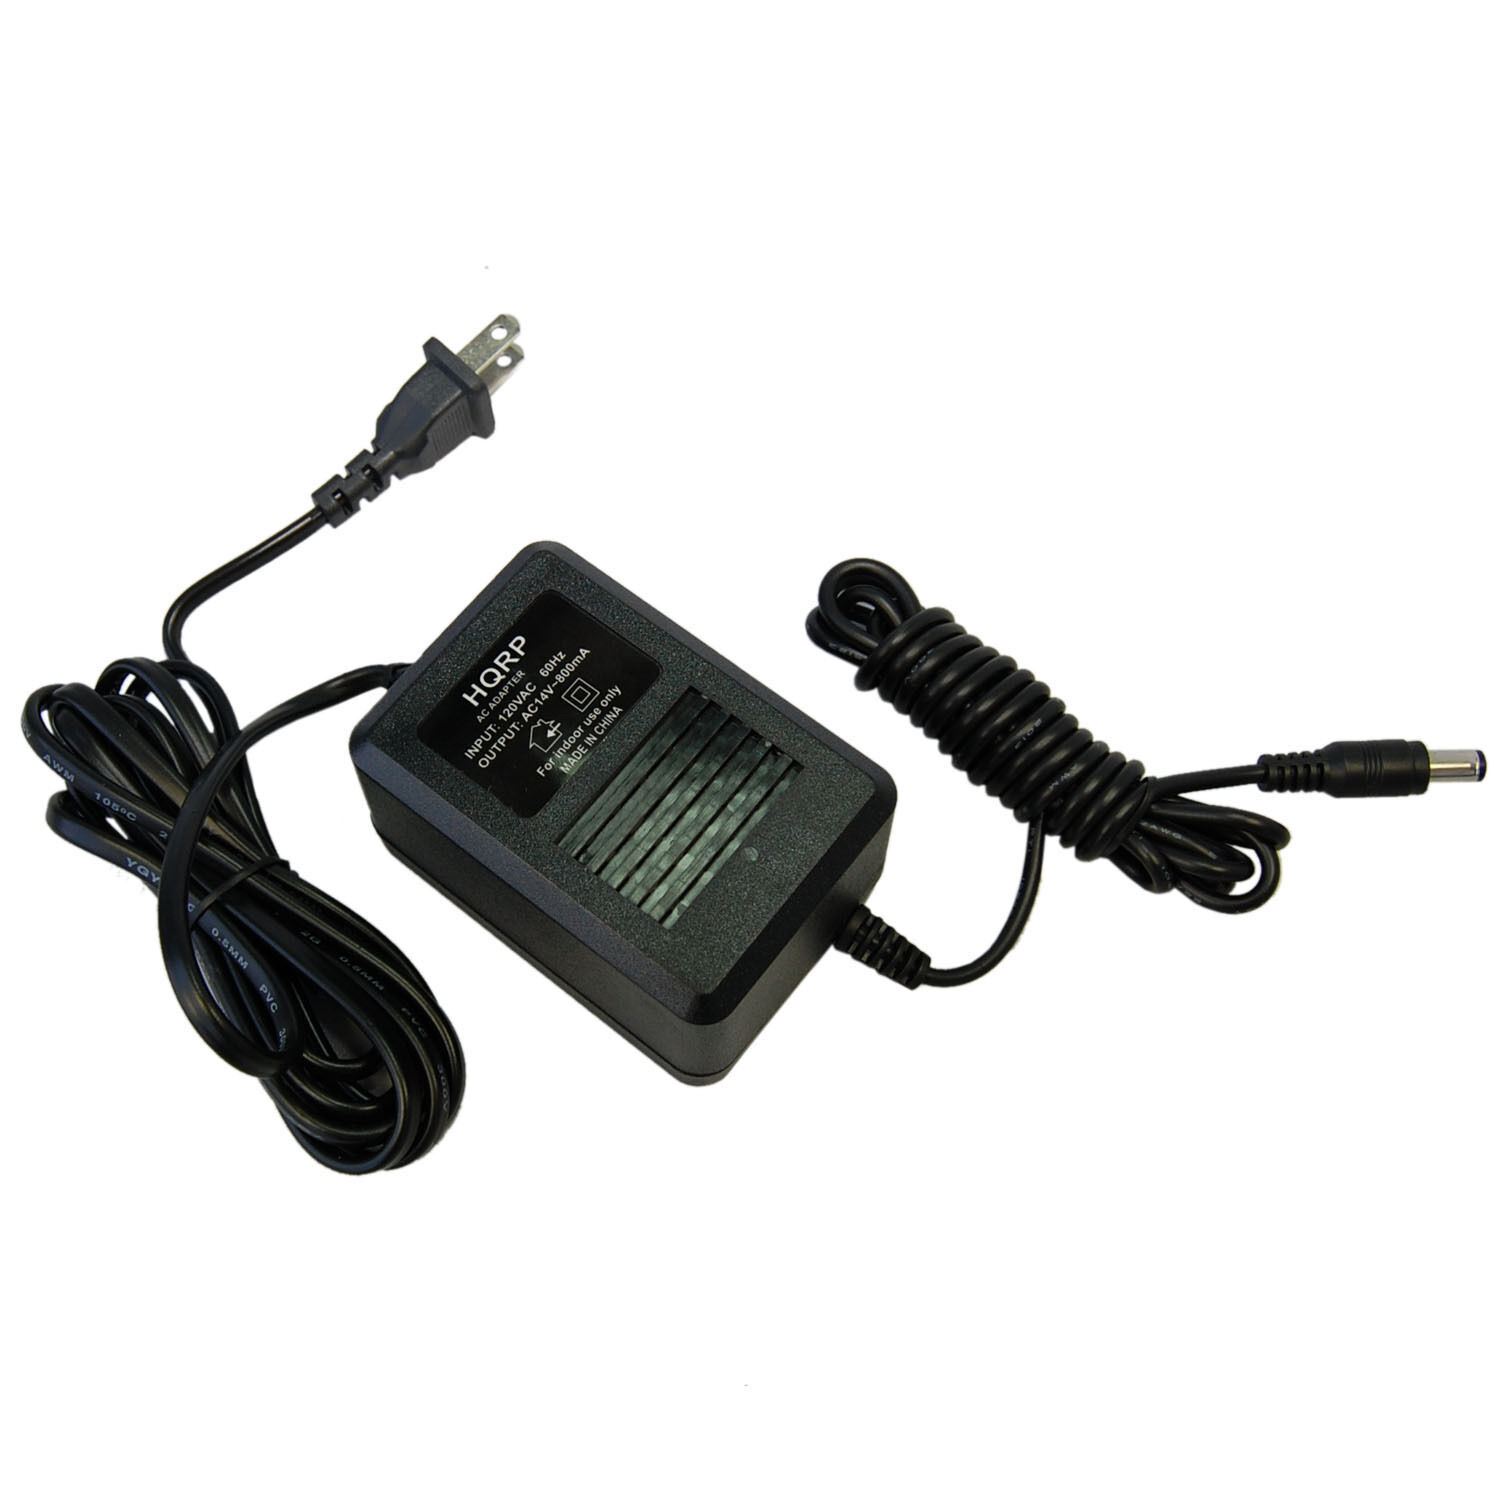 HQRP AC Power Adapter for Boss DR-770 DR-880 Dr. Rhythm SP-505 VF-1 GX-700